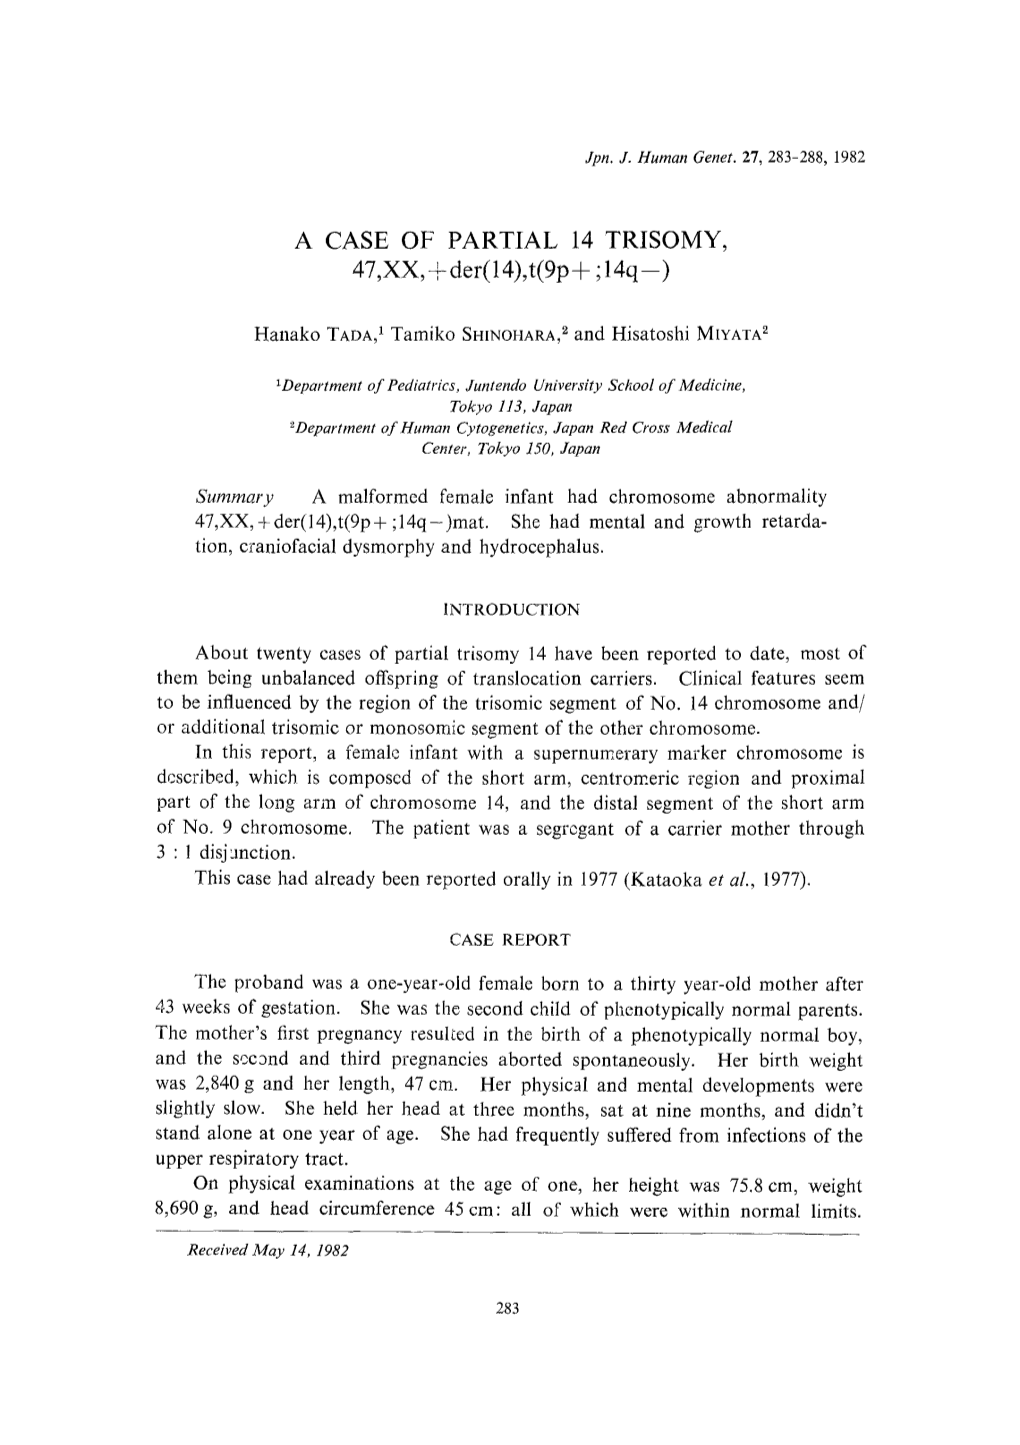 A Case of Partial 14 Trisomy, 47, XX,+Der(14)